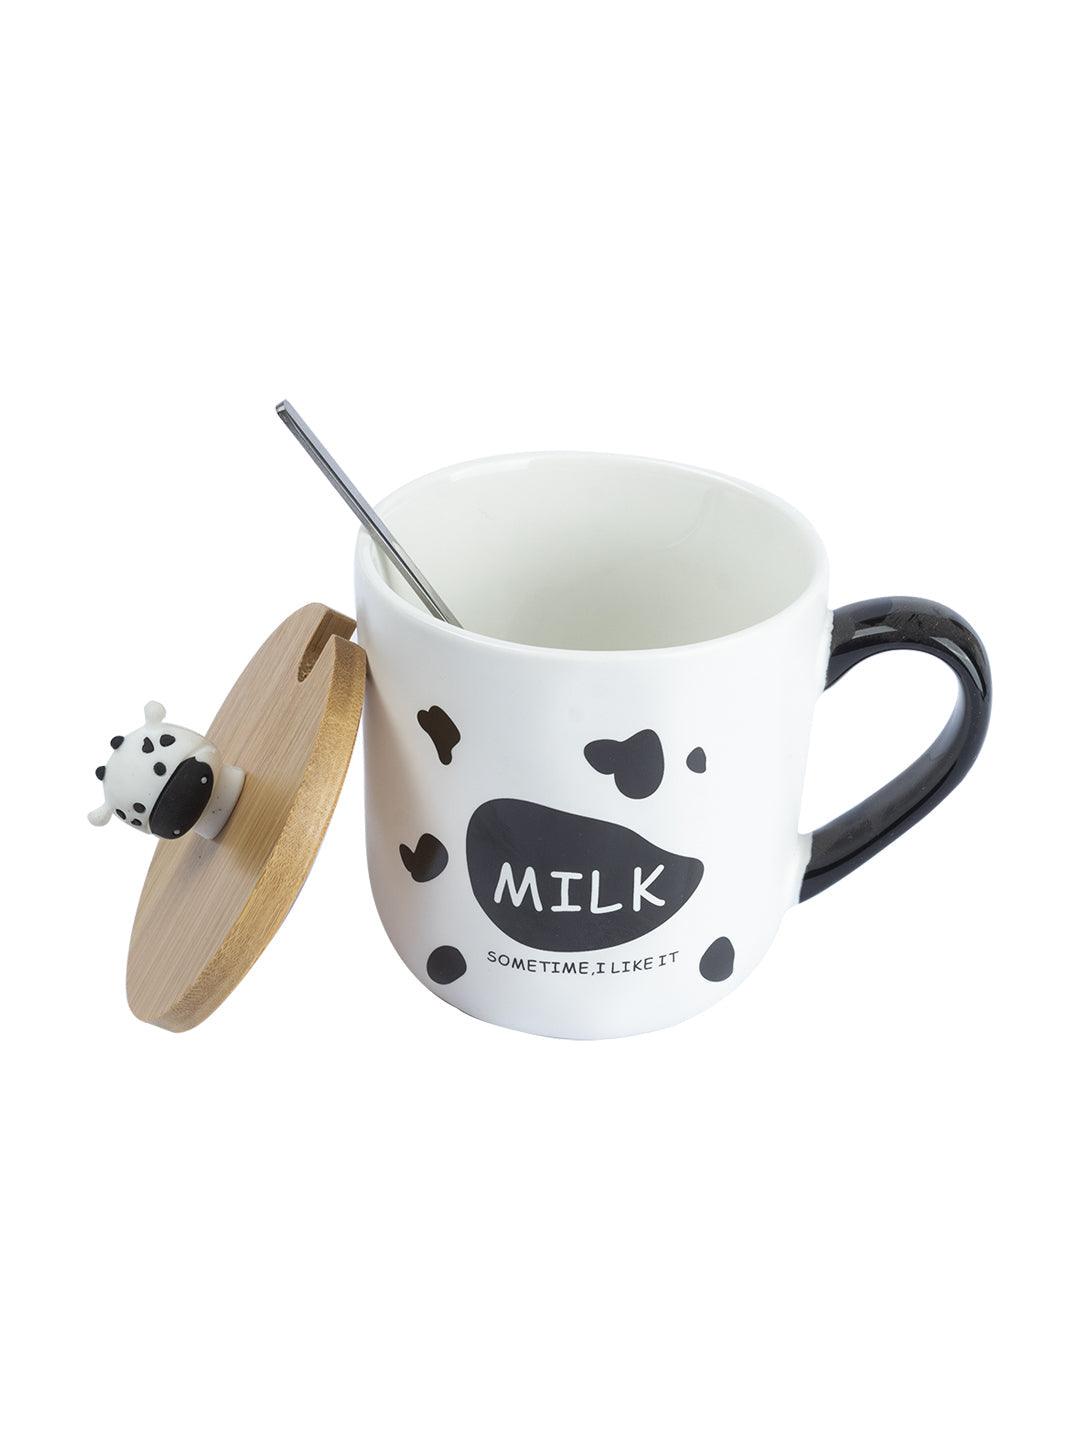 "MILK SOMETIME I LIKE IT" Coffee Mug With Lid -  450mL, Mixing Spoon